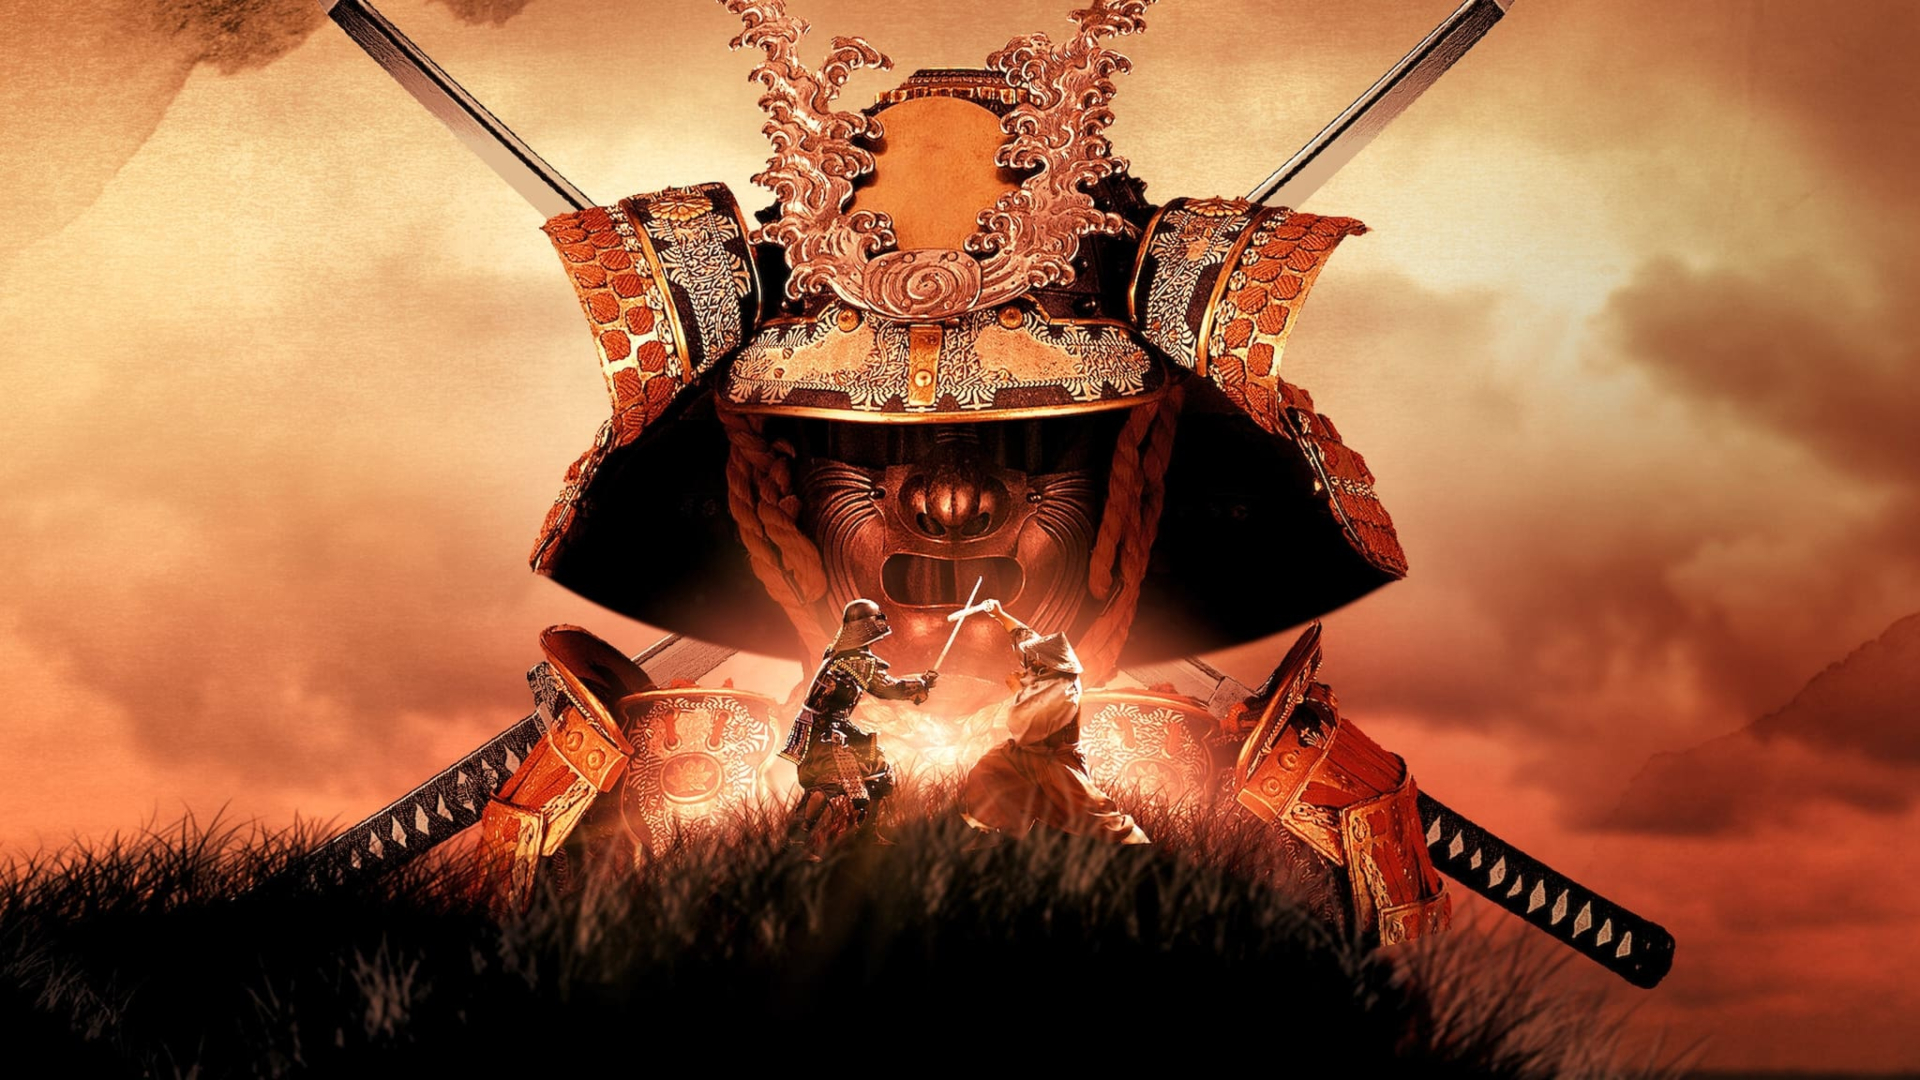 Age Of Samurai: Battle For Japan Wallpapers